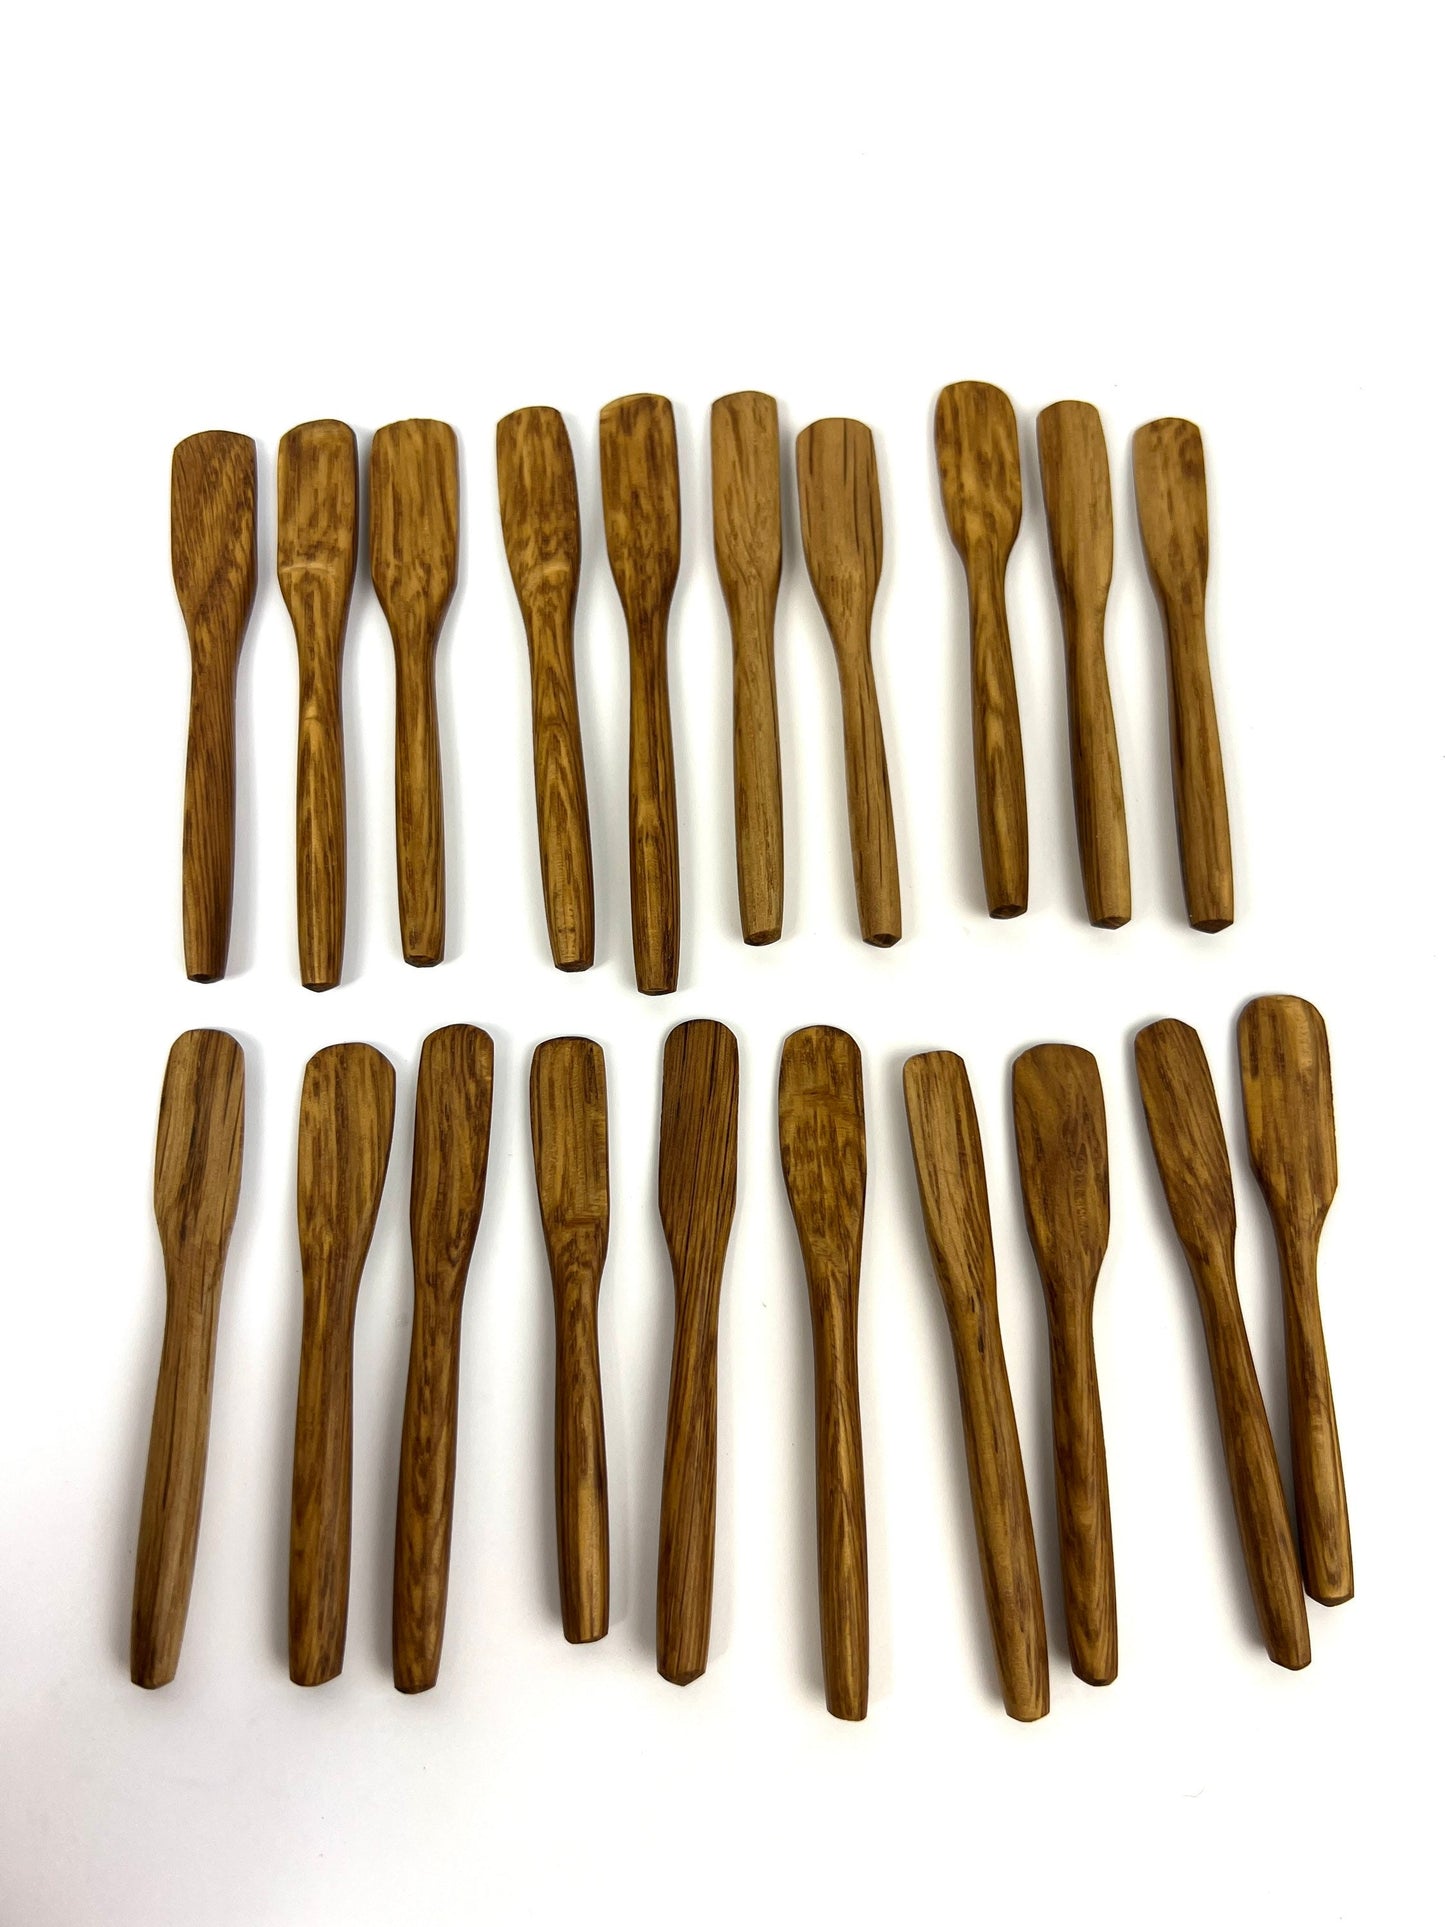 Small wooden cosmetics spatula applicator